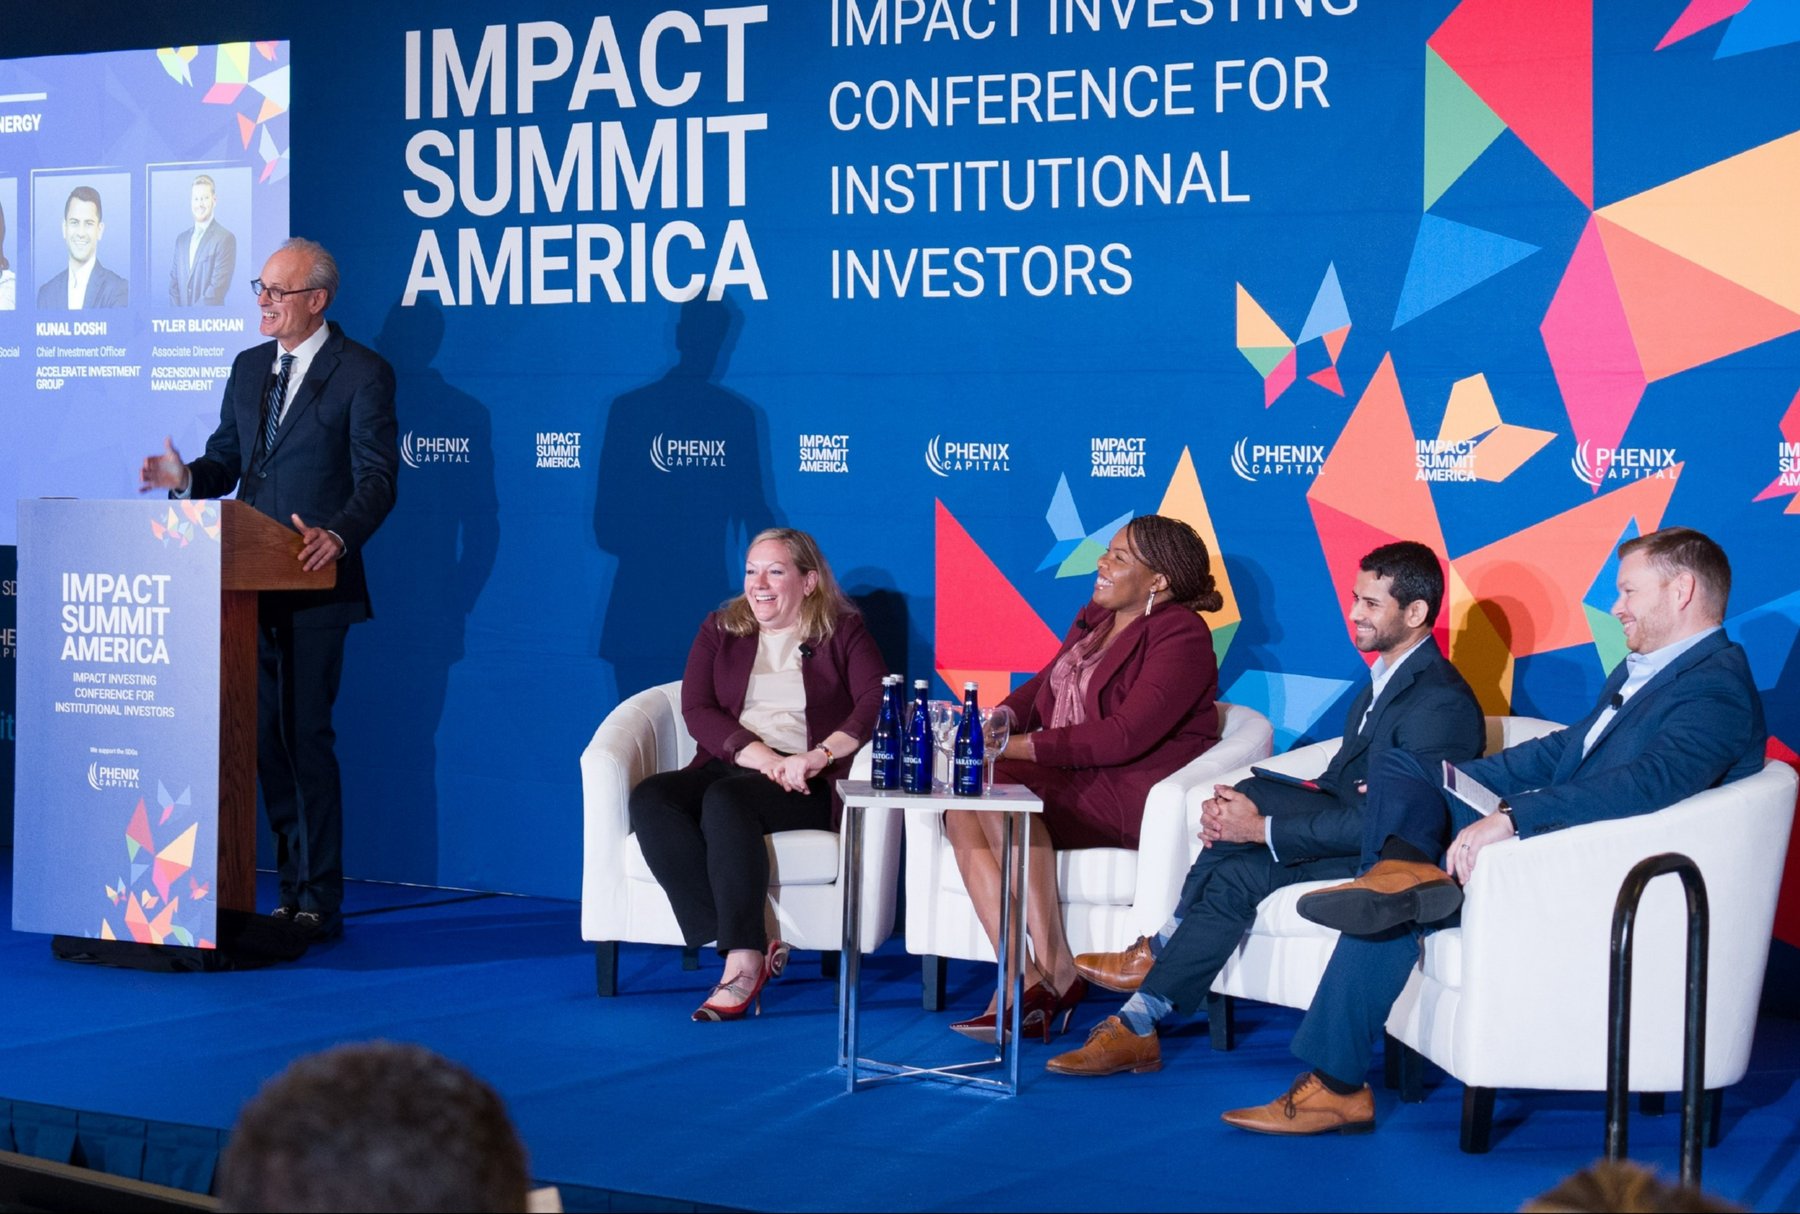 Impact Summit America